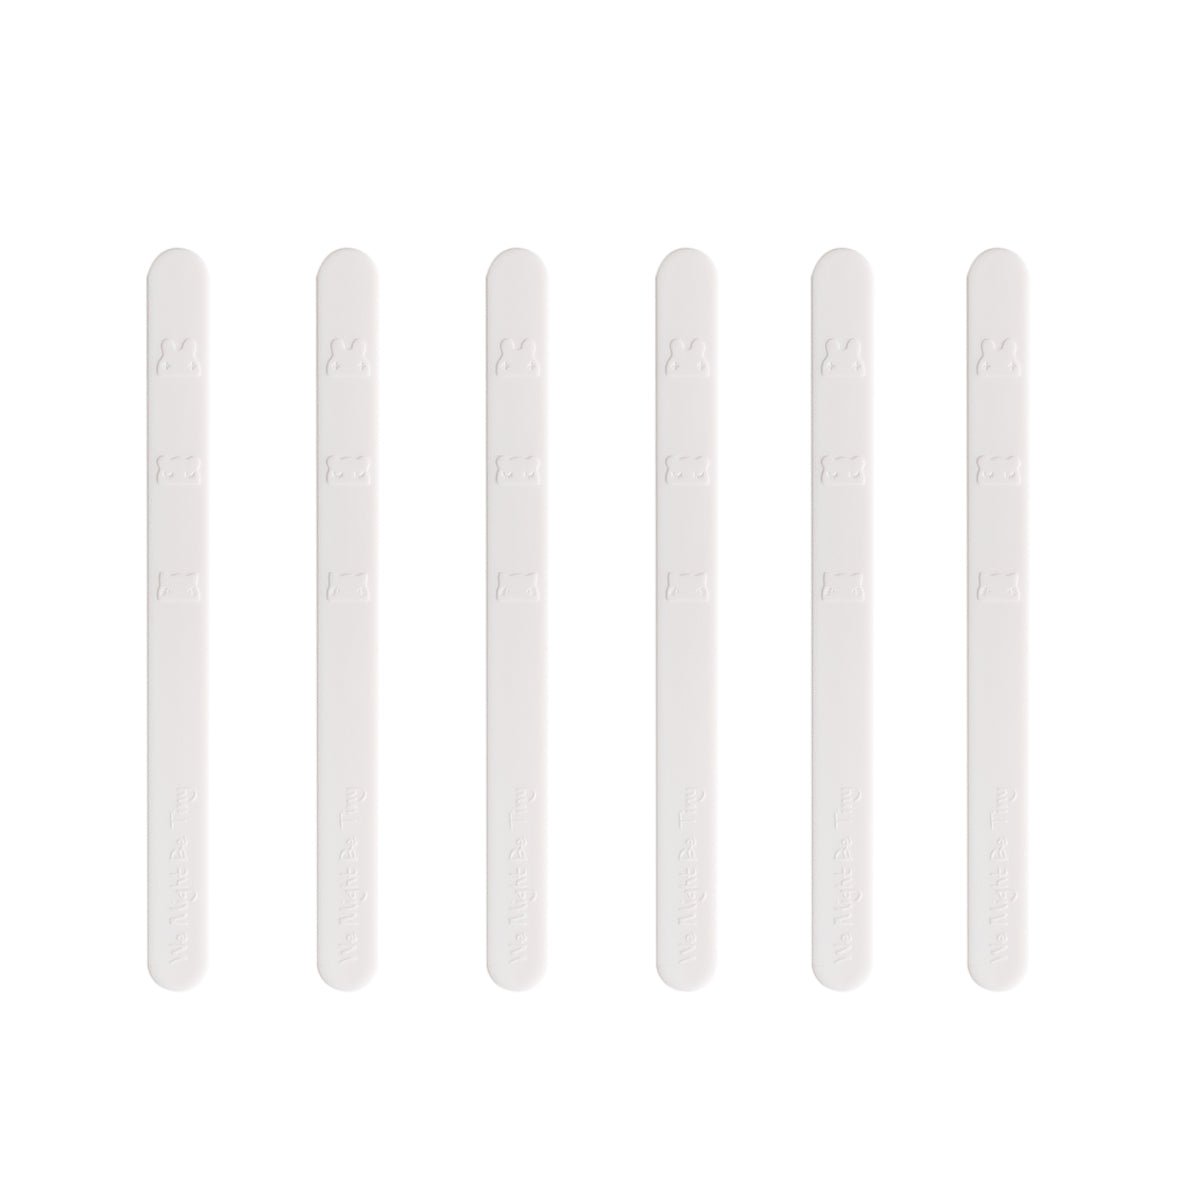 Icy pole sticks (set of 6)